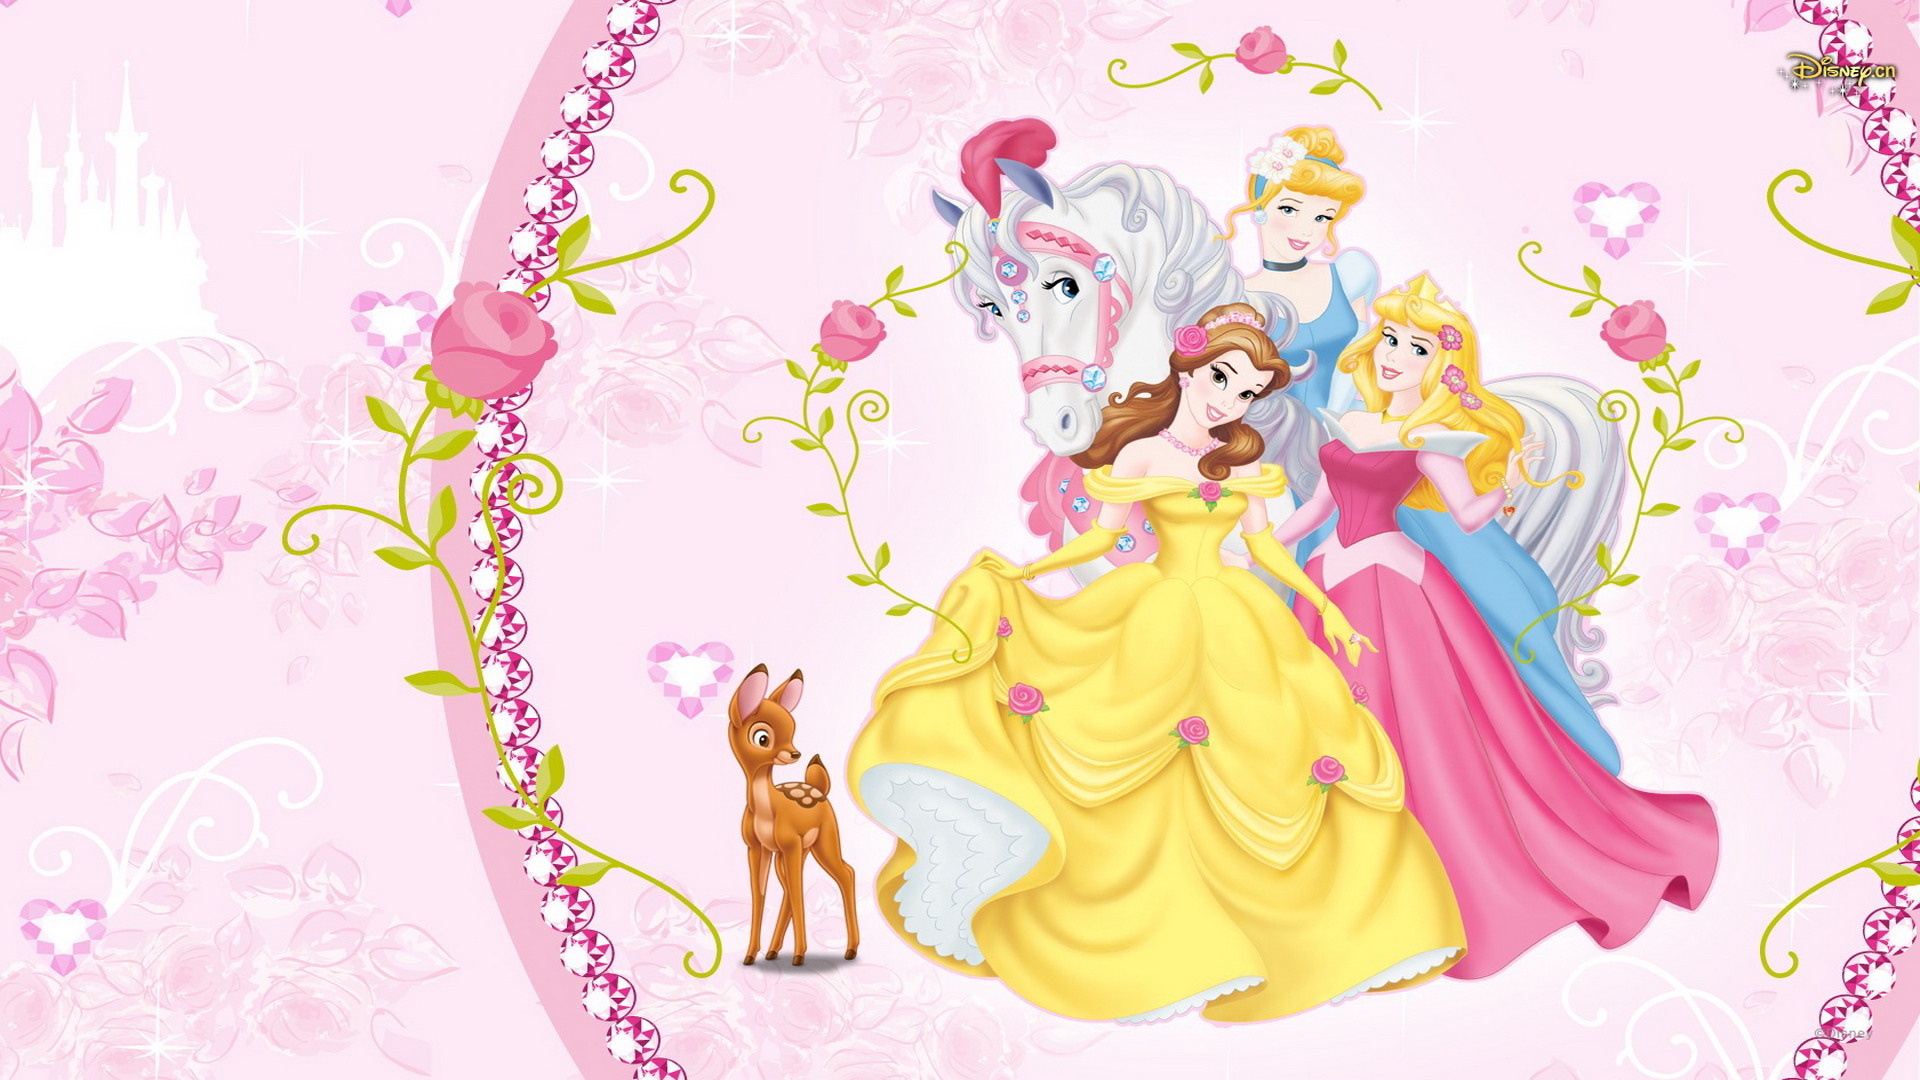 Princesses wallpaper